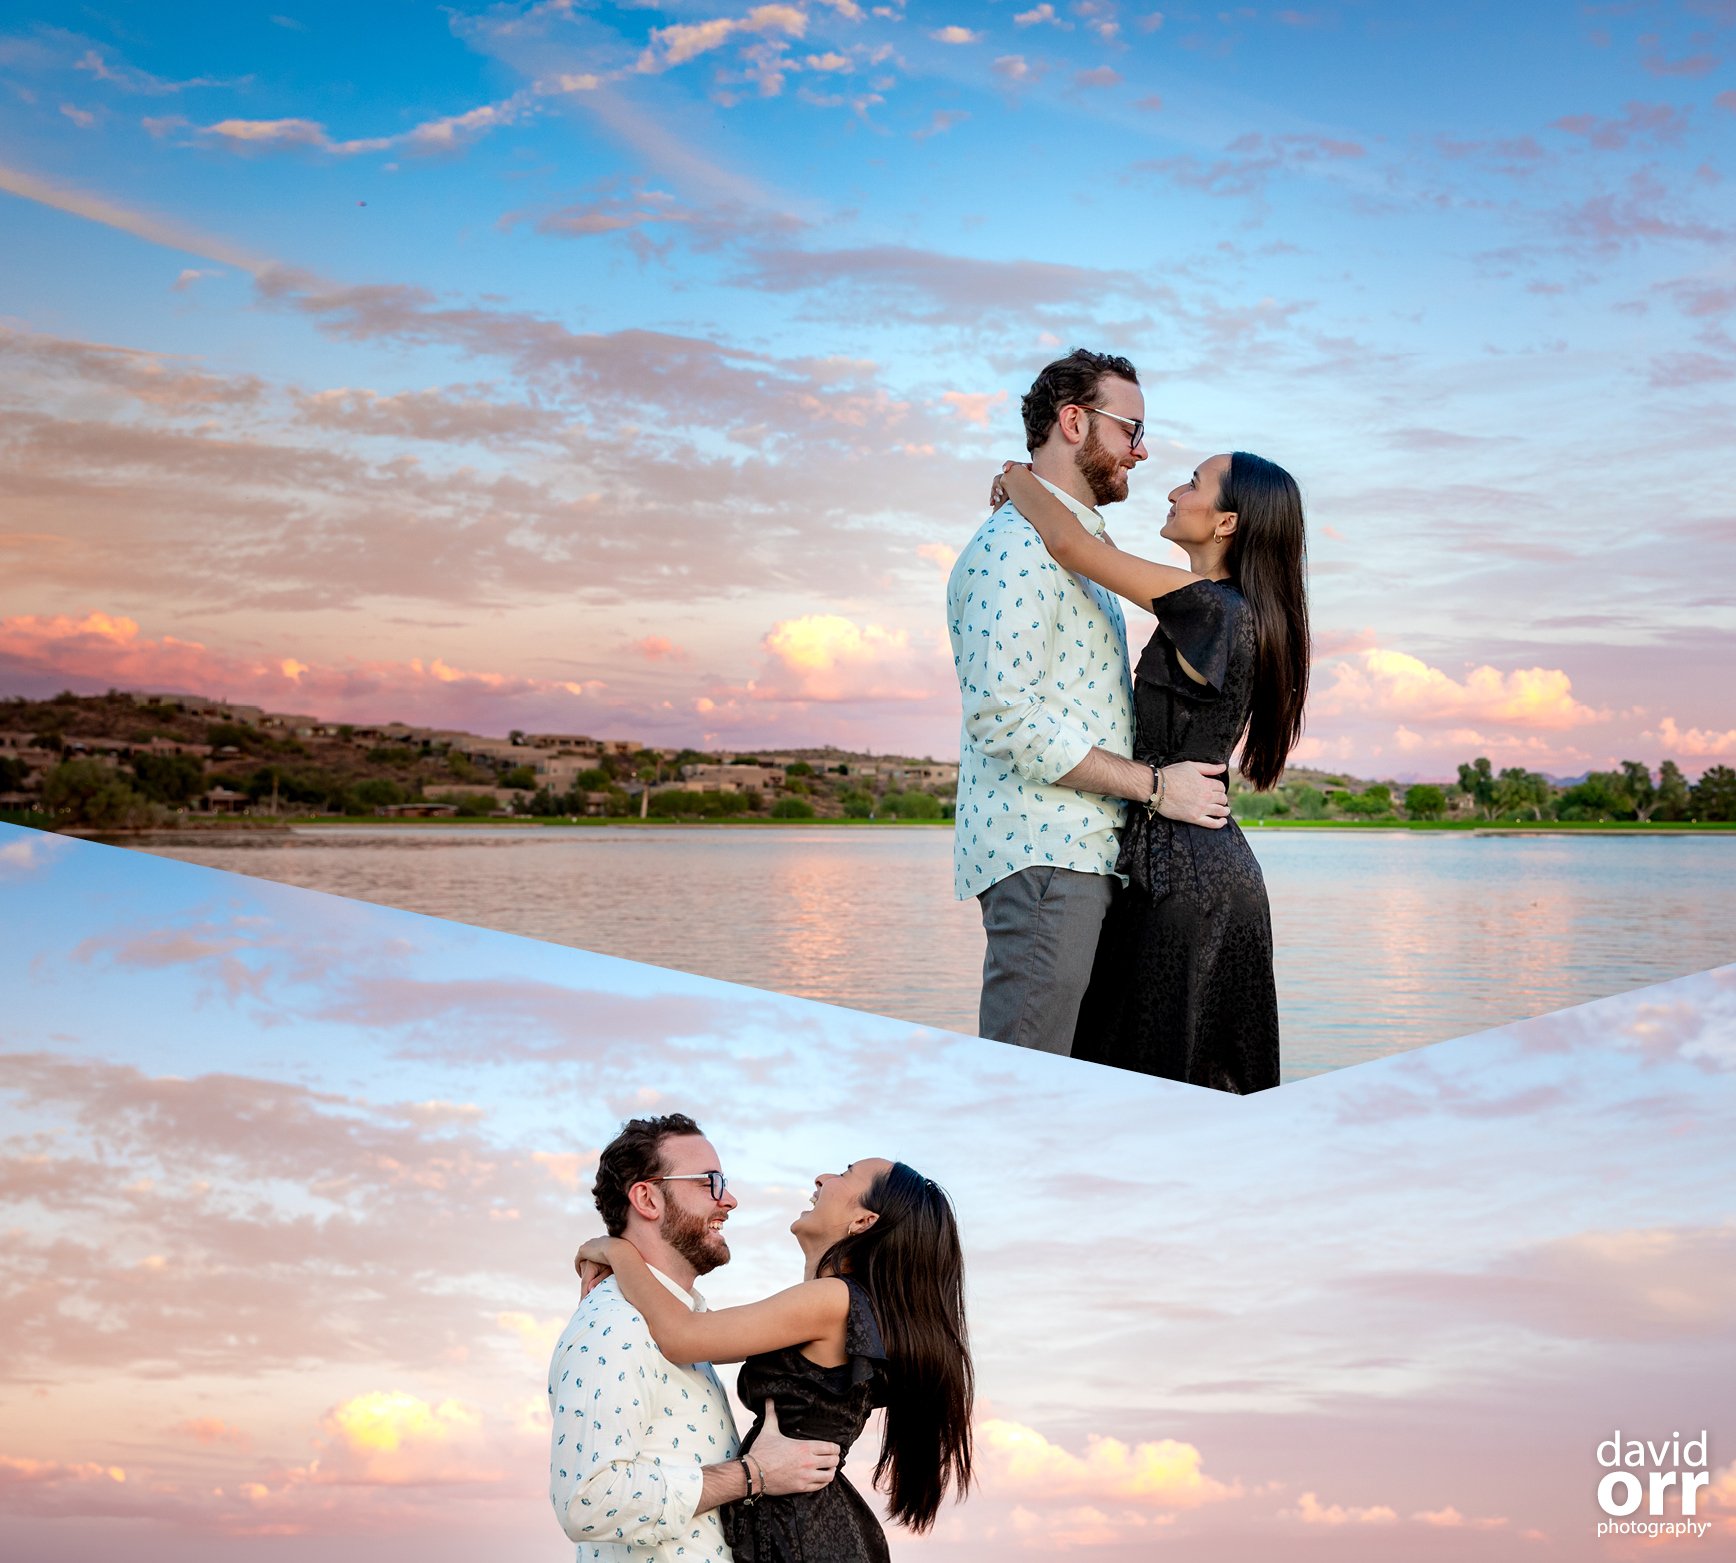 David-Orr-Photography_Fountain-Hills-Arizona-Proposals-Engagements3.jpg